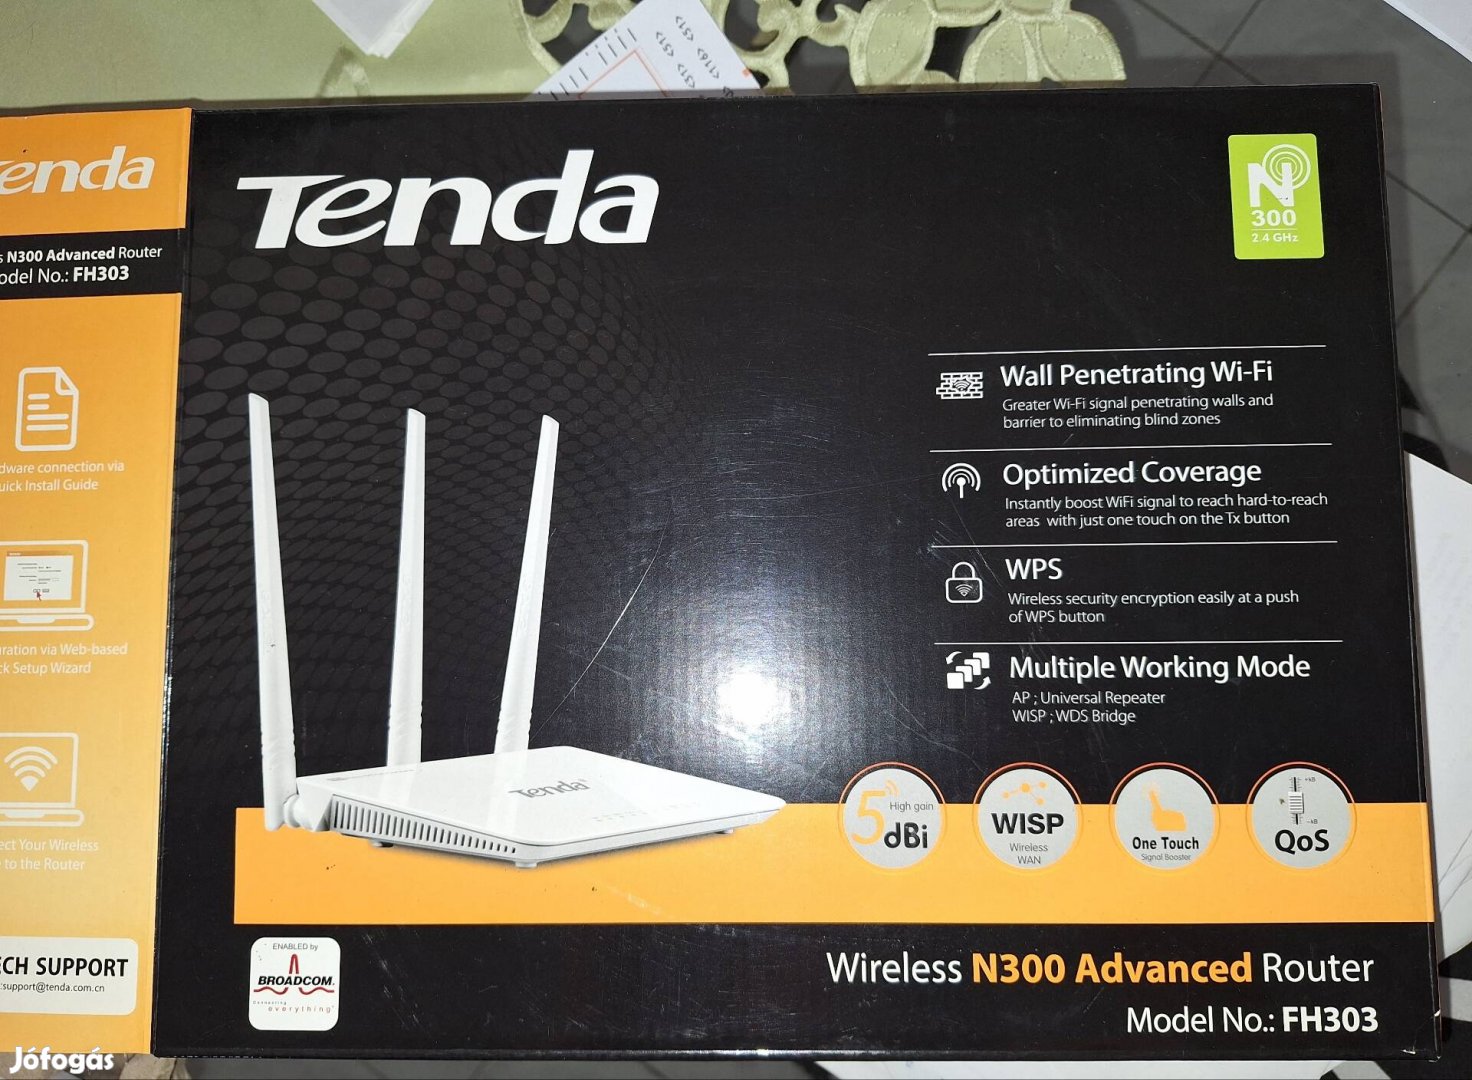 Tenda wireless N300 Advanced Router